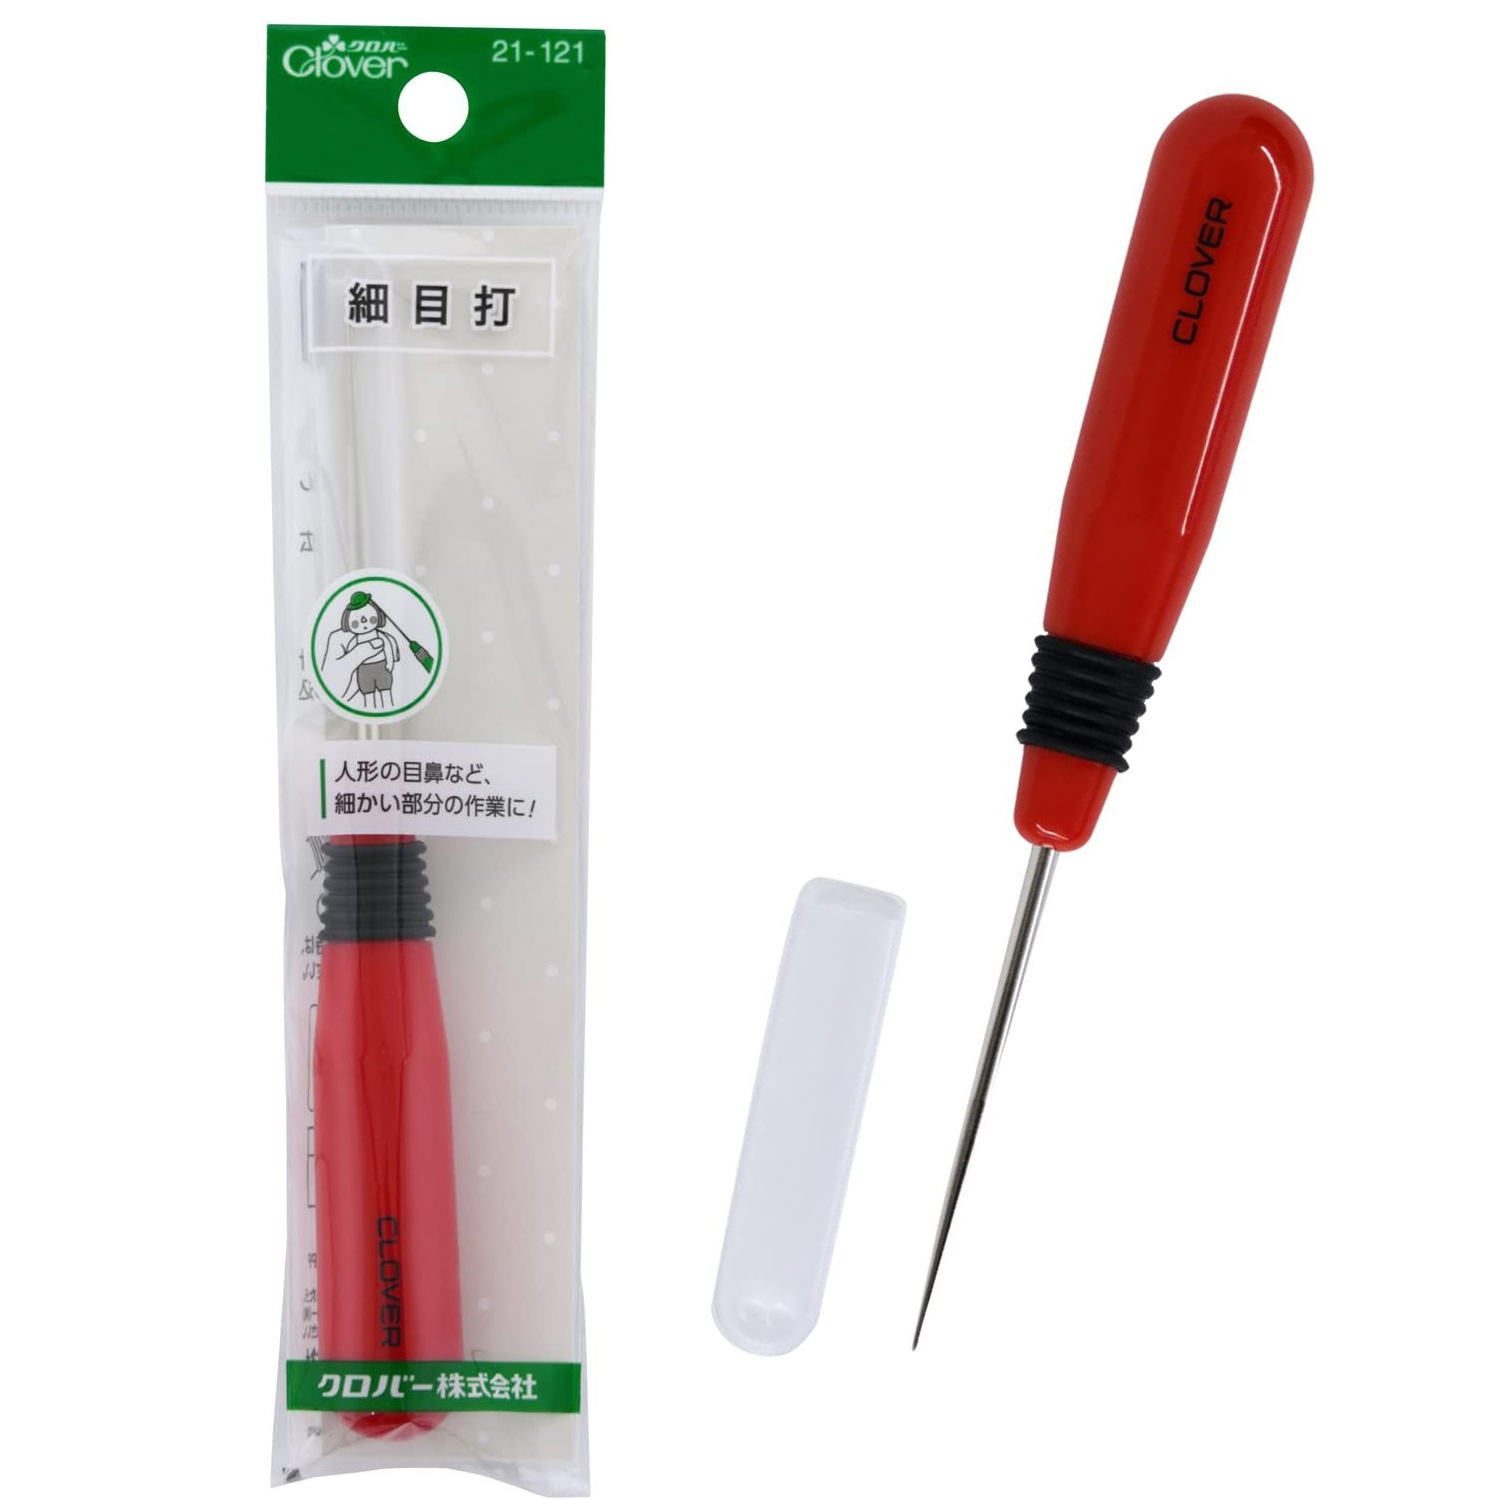 CL21-121 Clover N Thin Needle Tool (pcs)